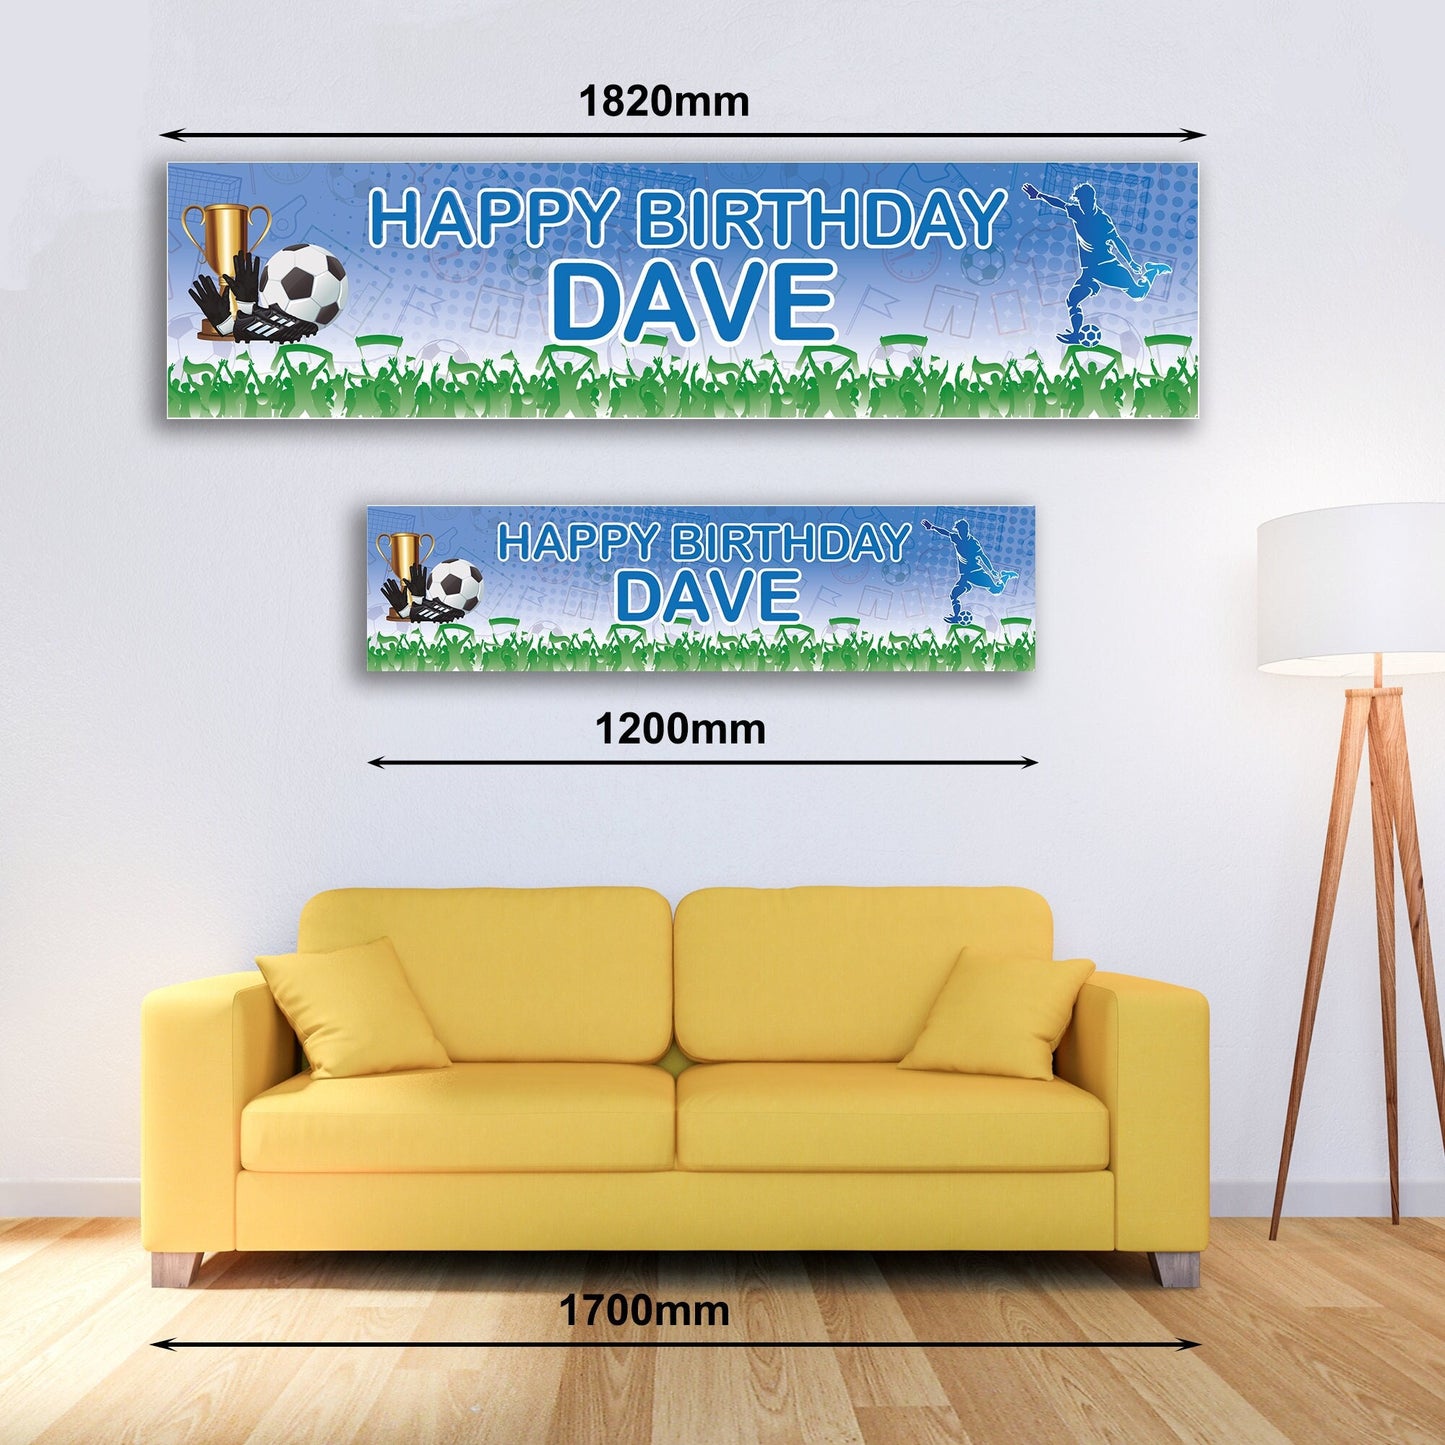 Personalised Banner - Football Banner, Football Decoration, Football Birthday Banner